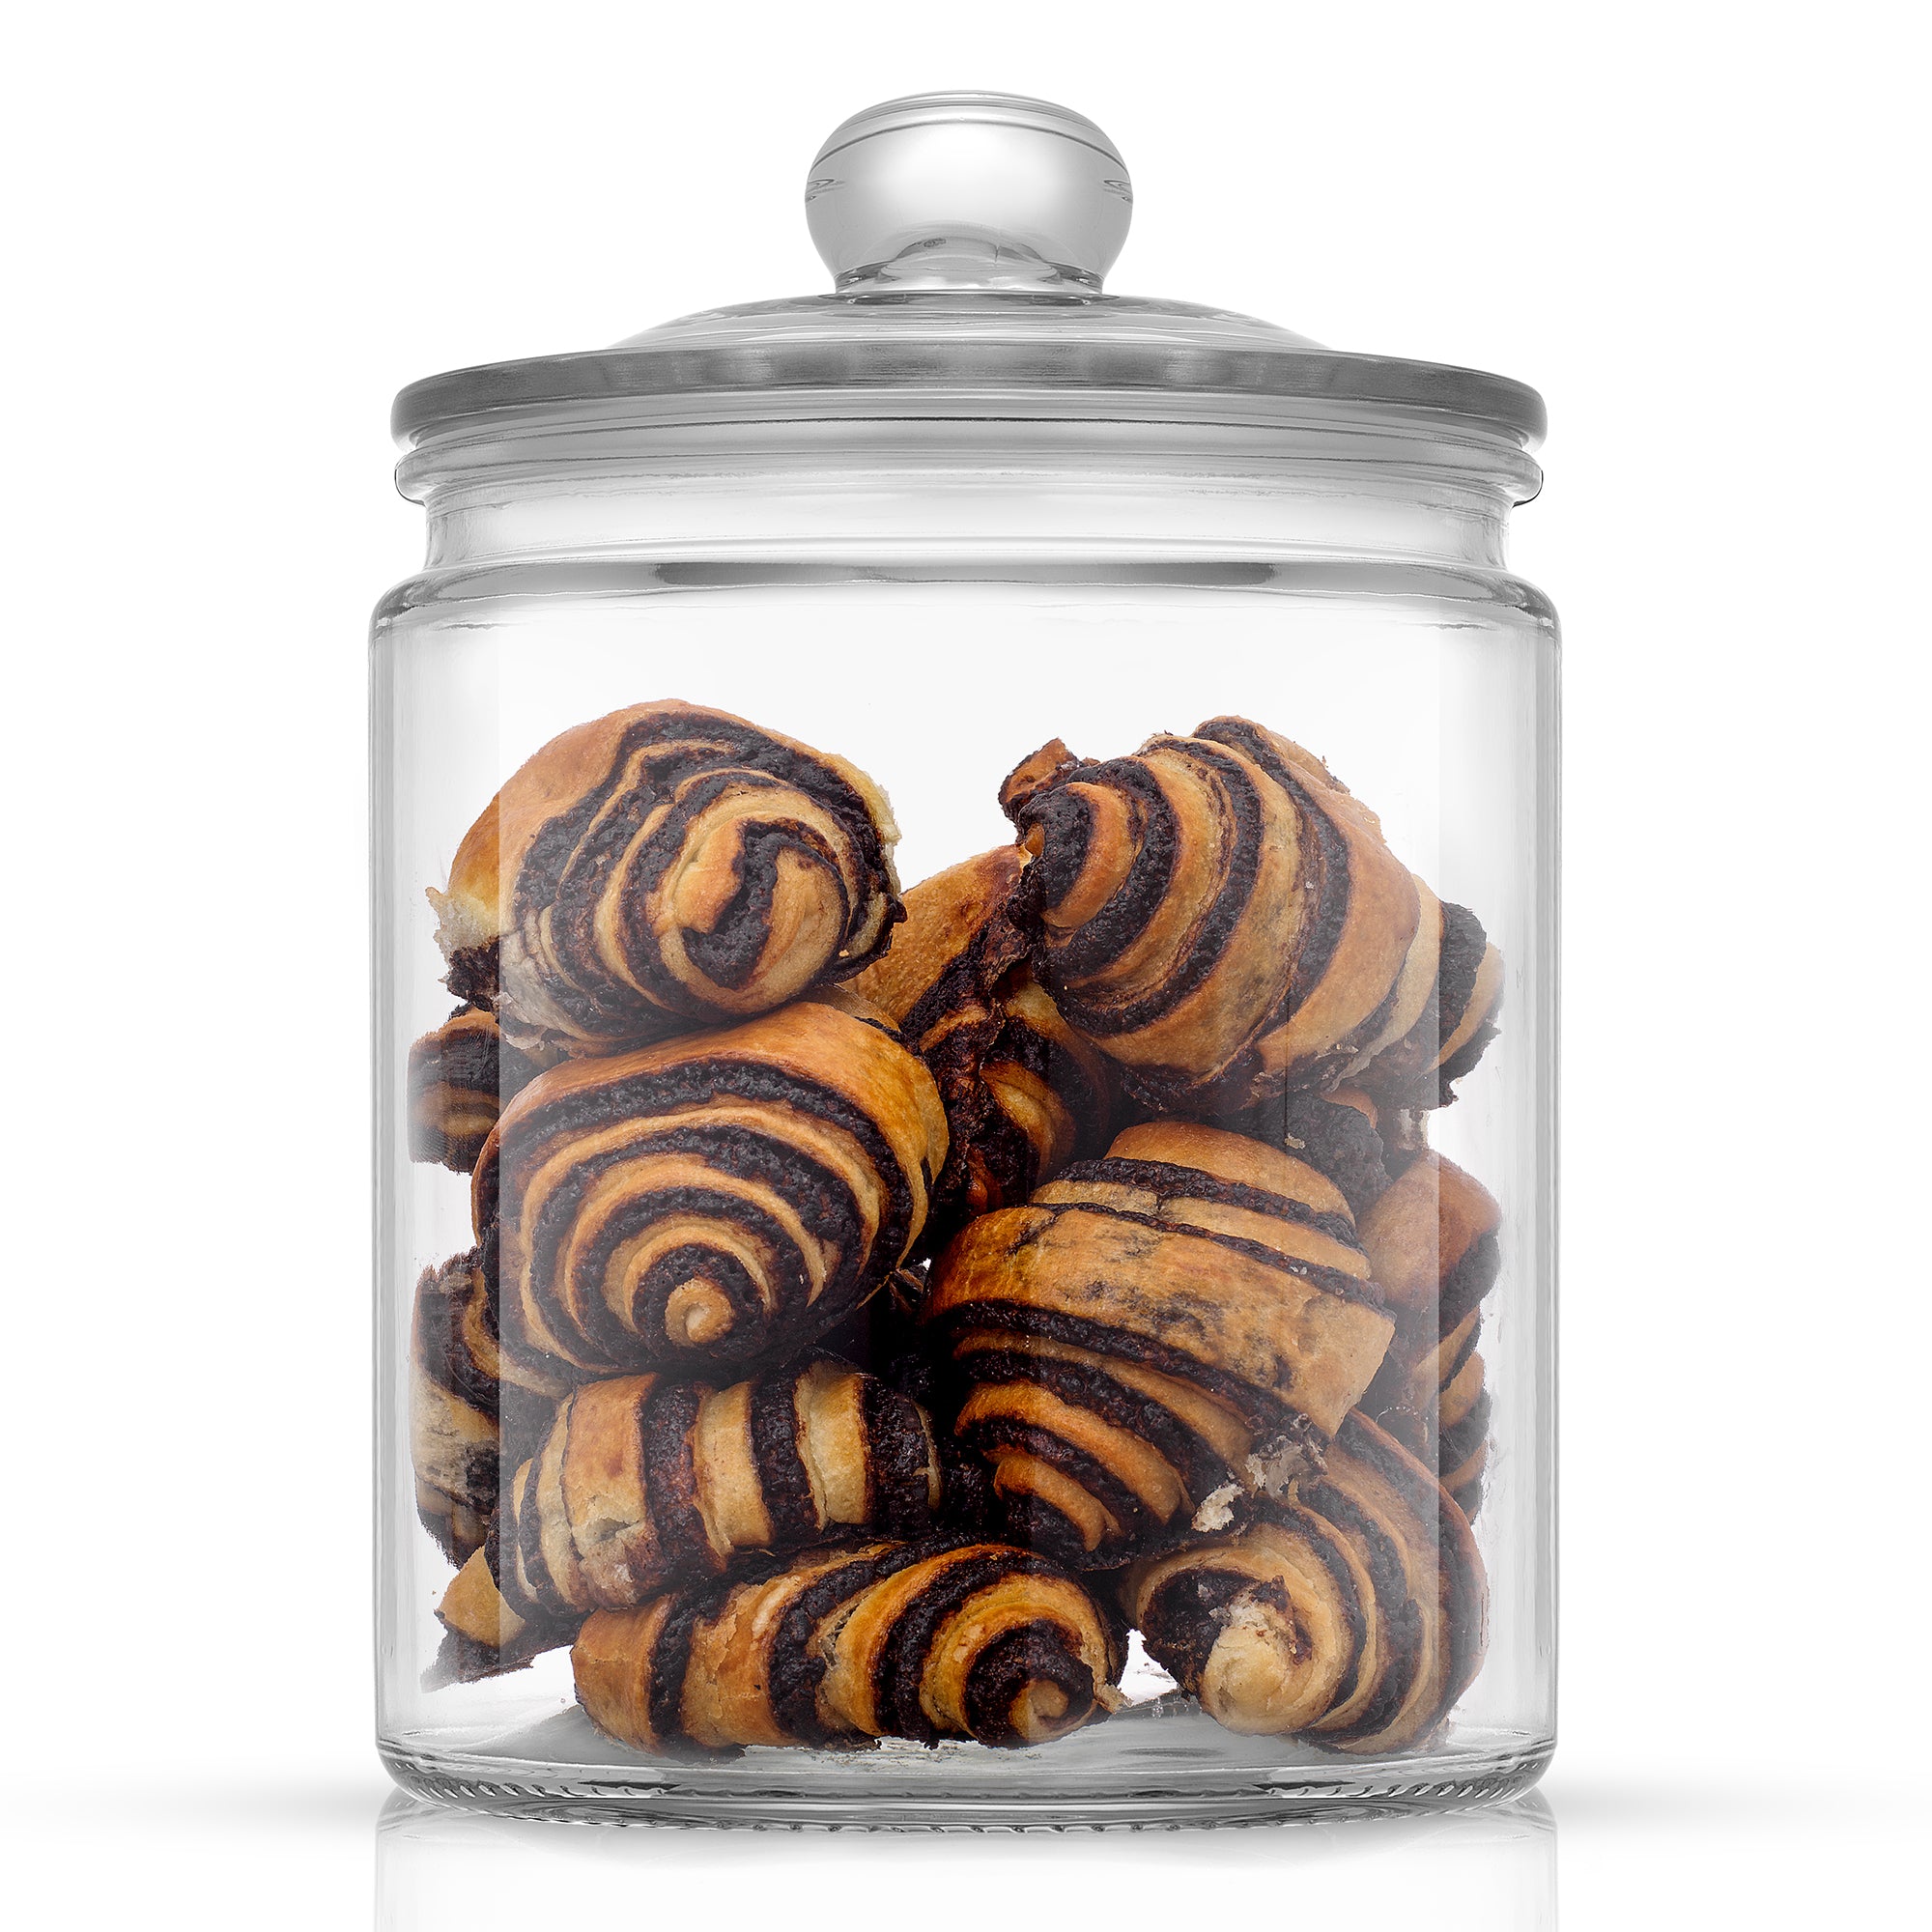 JoyFul Round Glass Cookie Jar with Airtight Lids